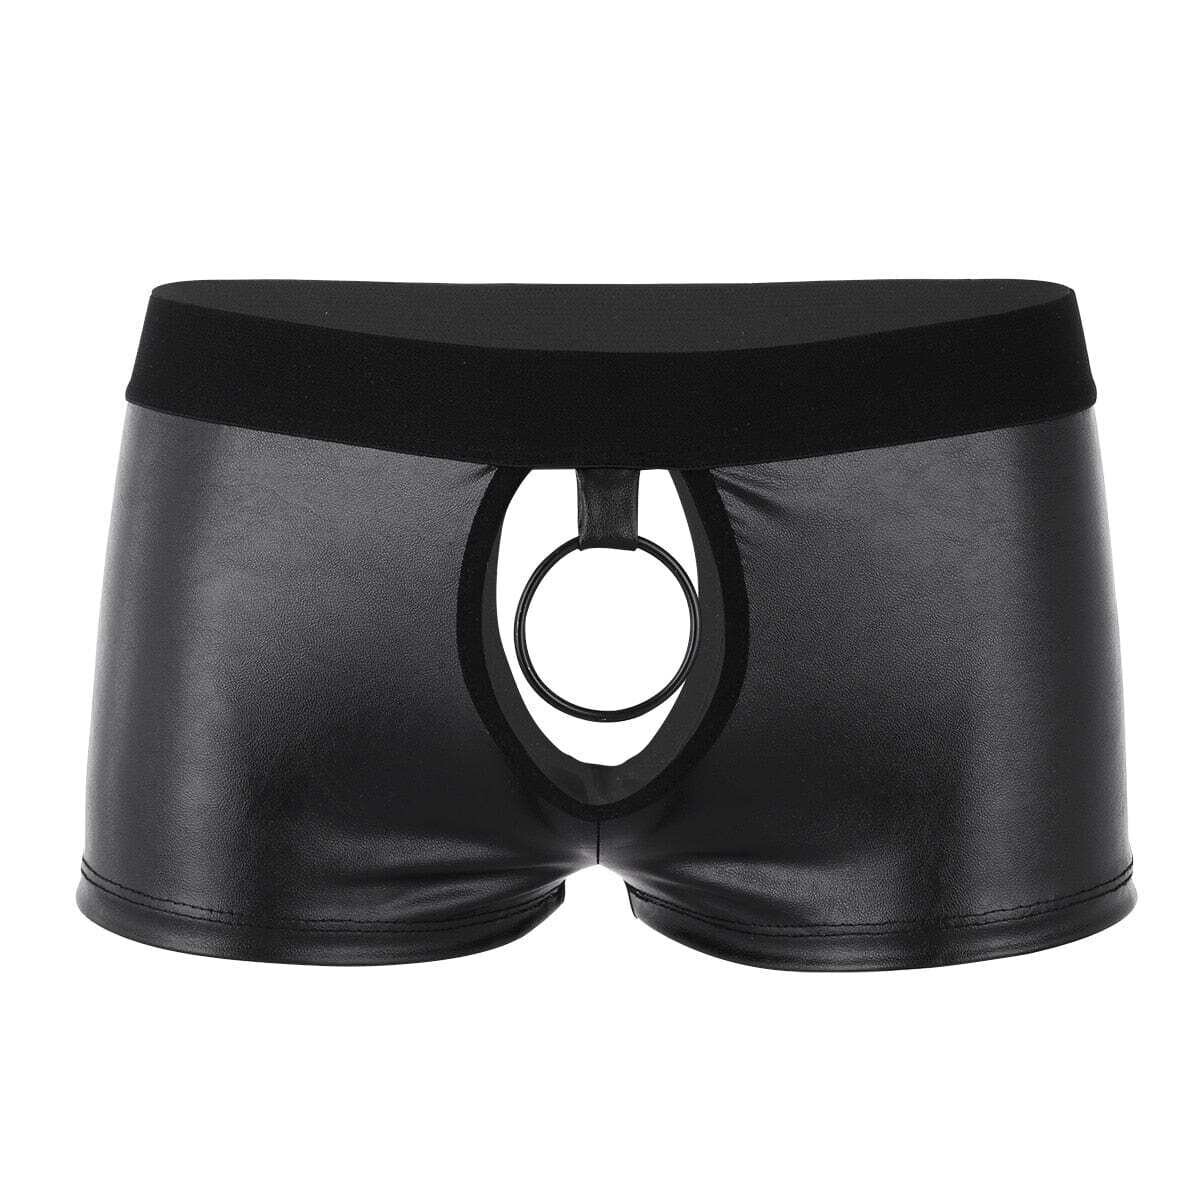 Inlzdz: Men's Lingerie Latex Panties Leather Exotic Underwear